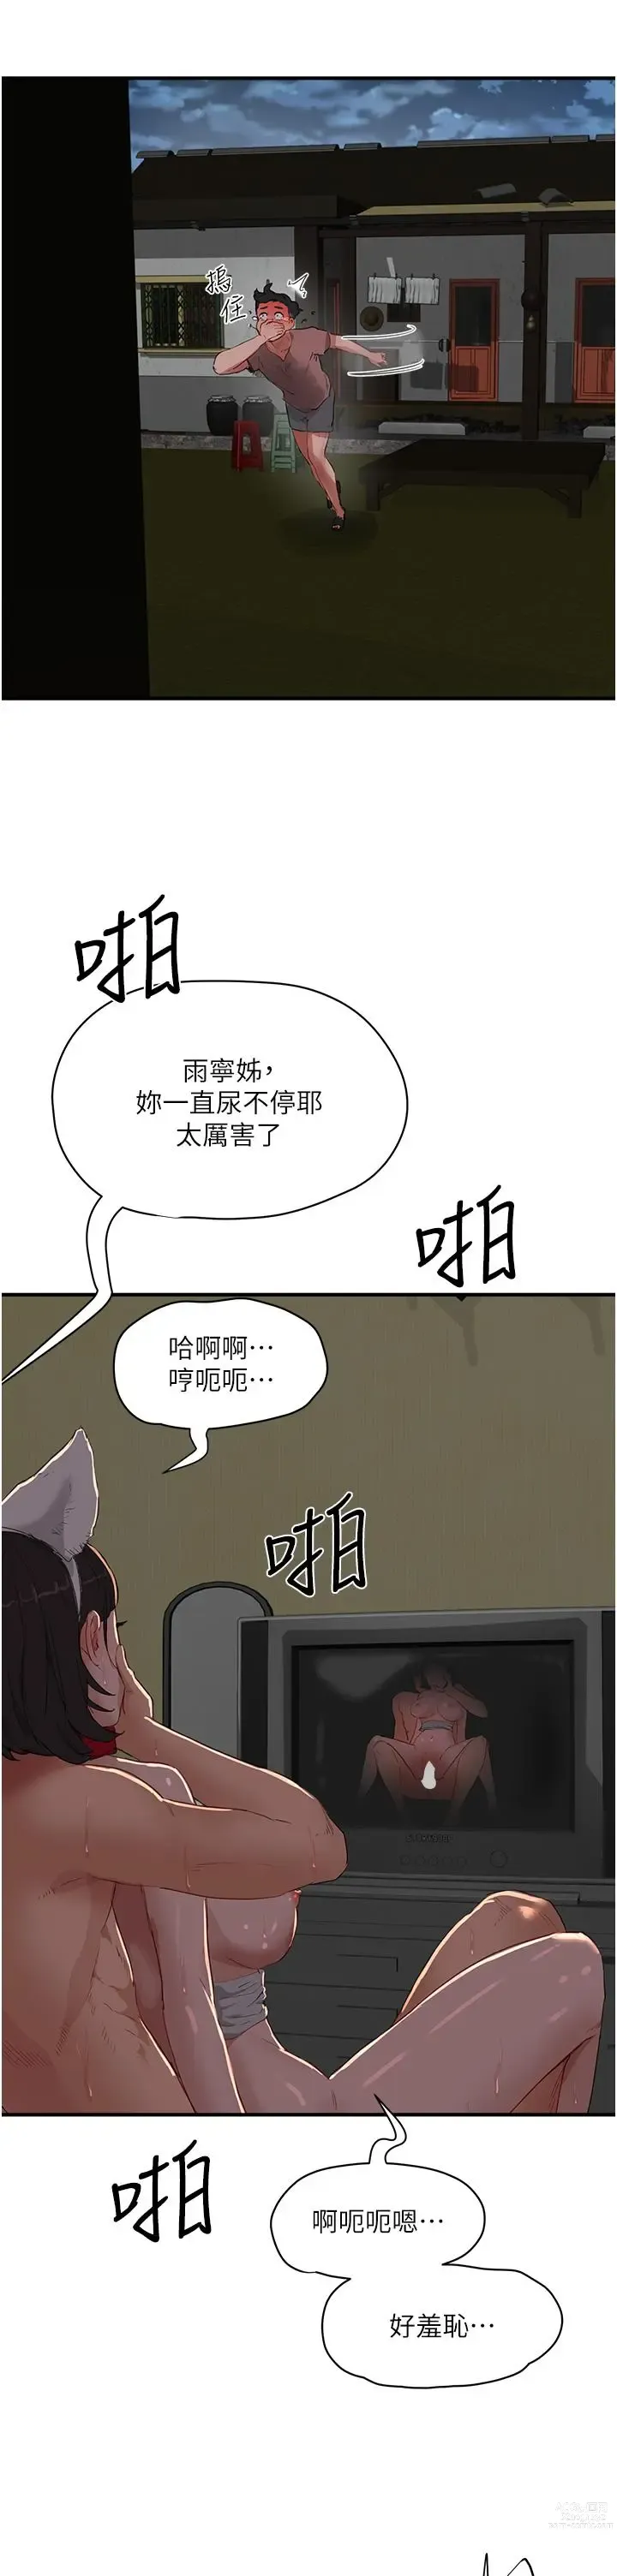 Page 9 of manga 夏日深处/Summer of Love 61-76